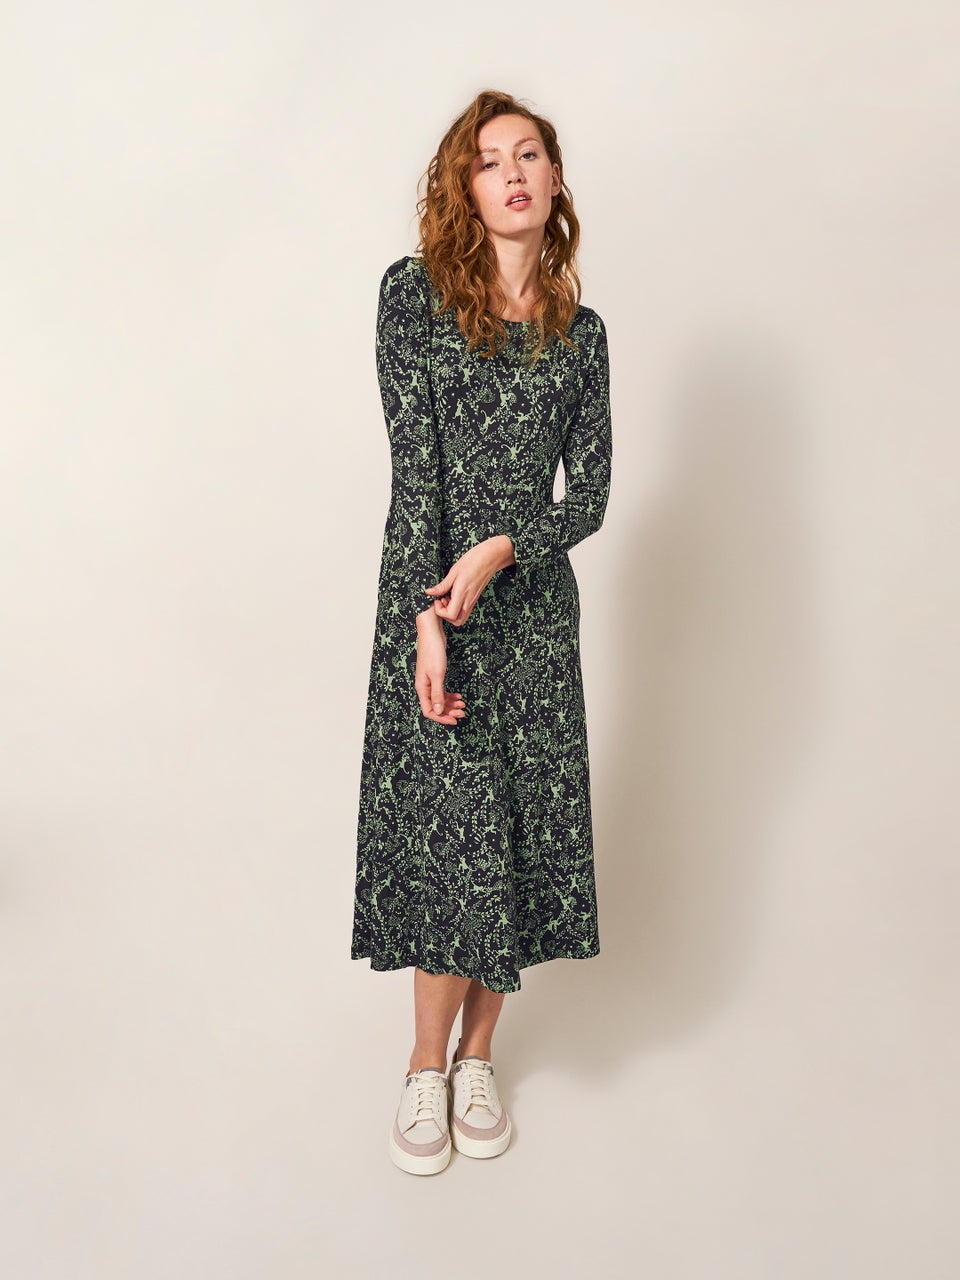 Madeline Eco Vero Jersey Dress